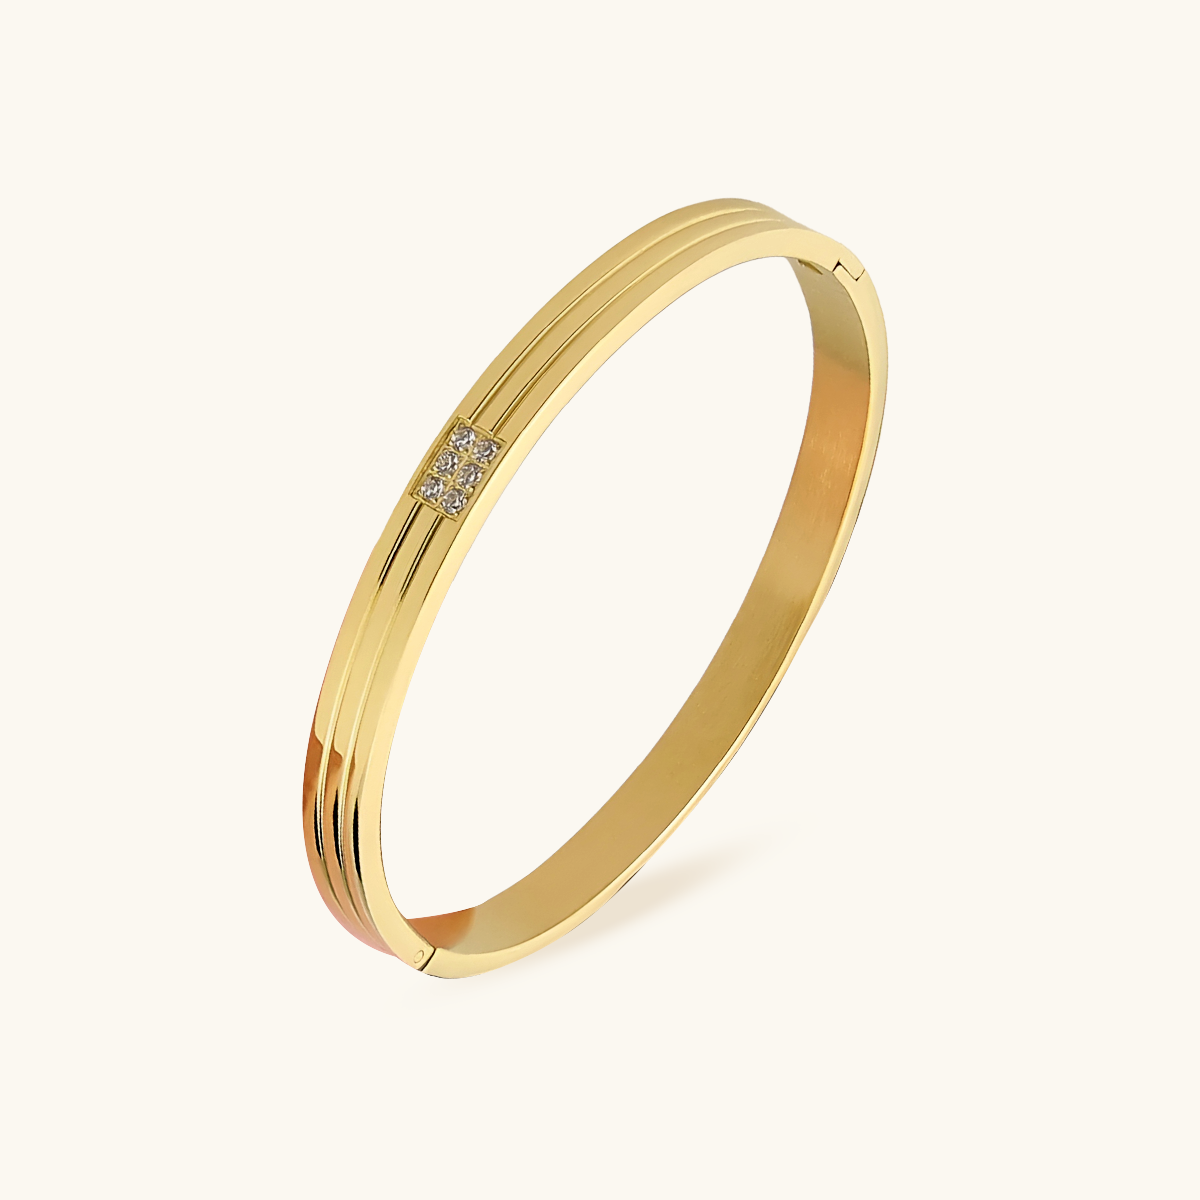 Carved Stone Bangle Bracelet  - Gold